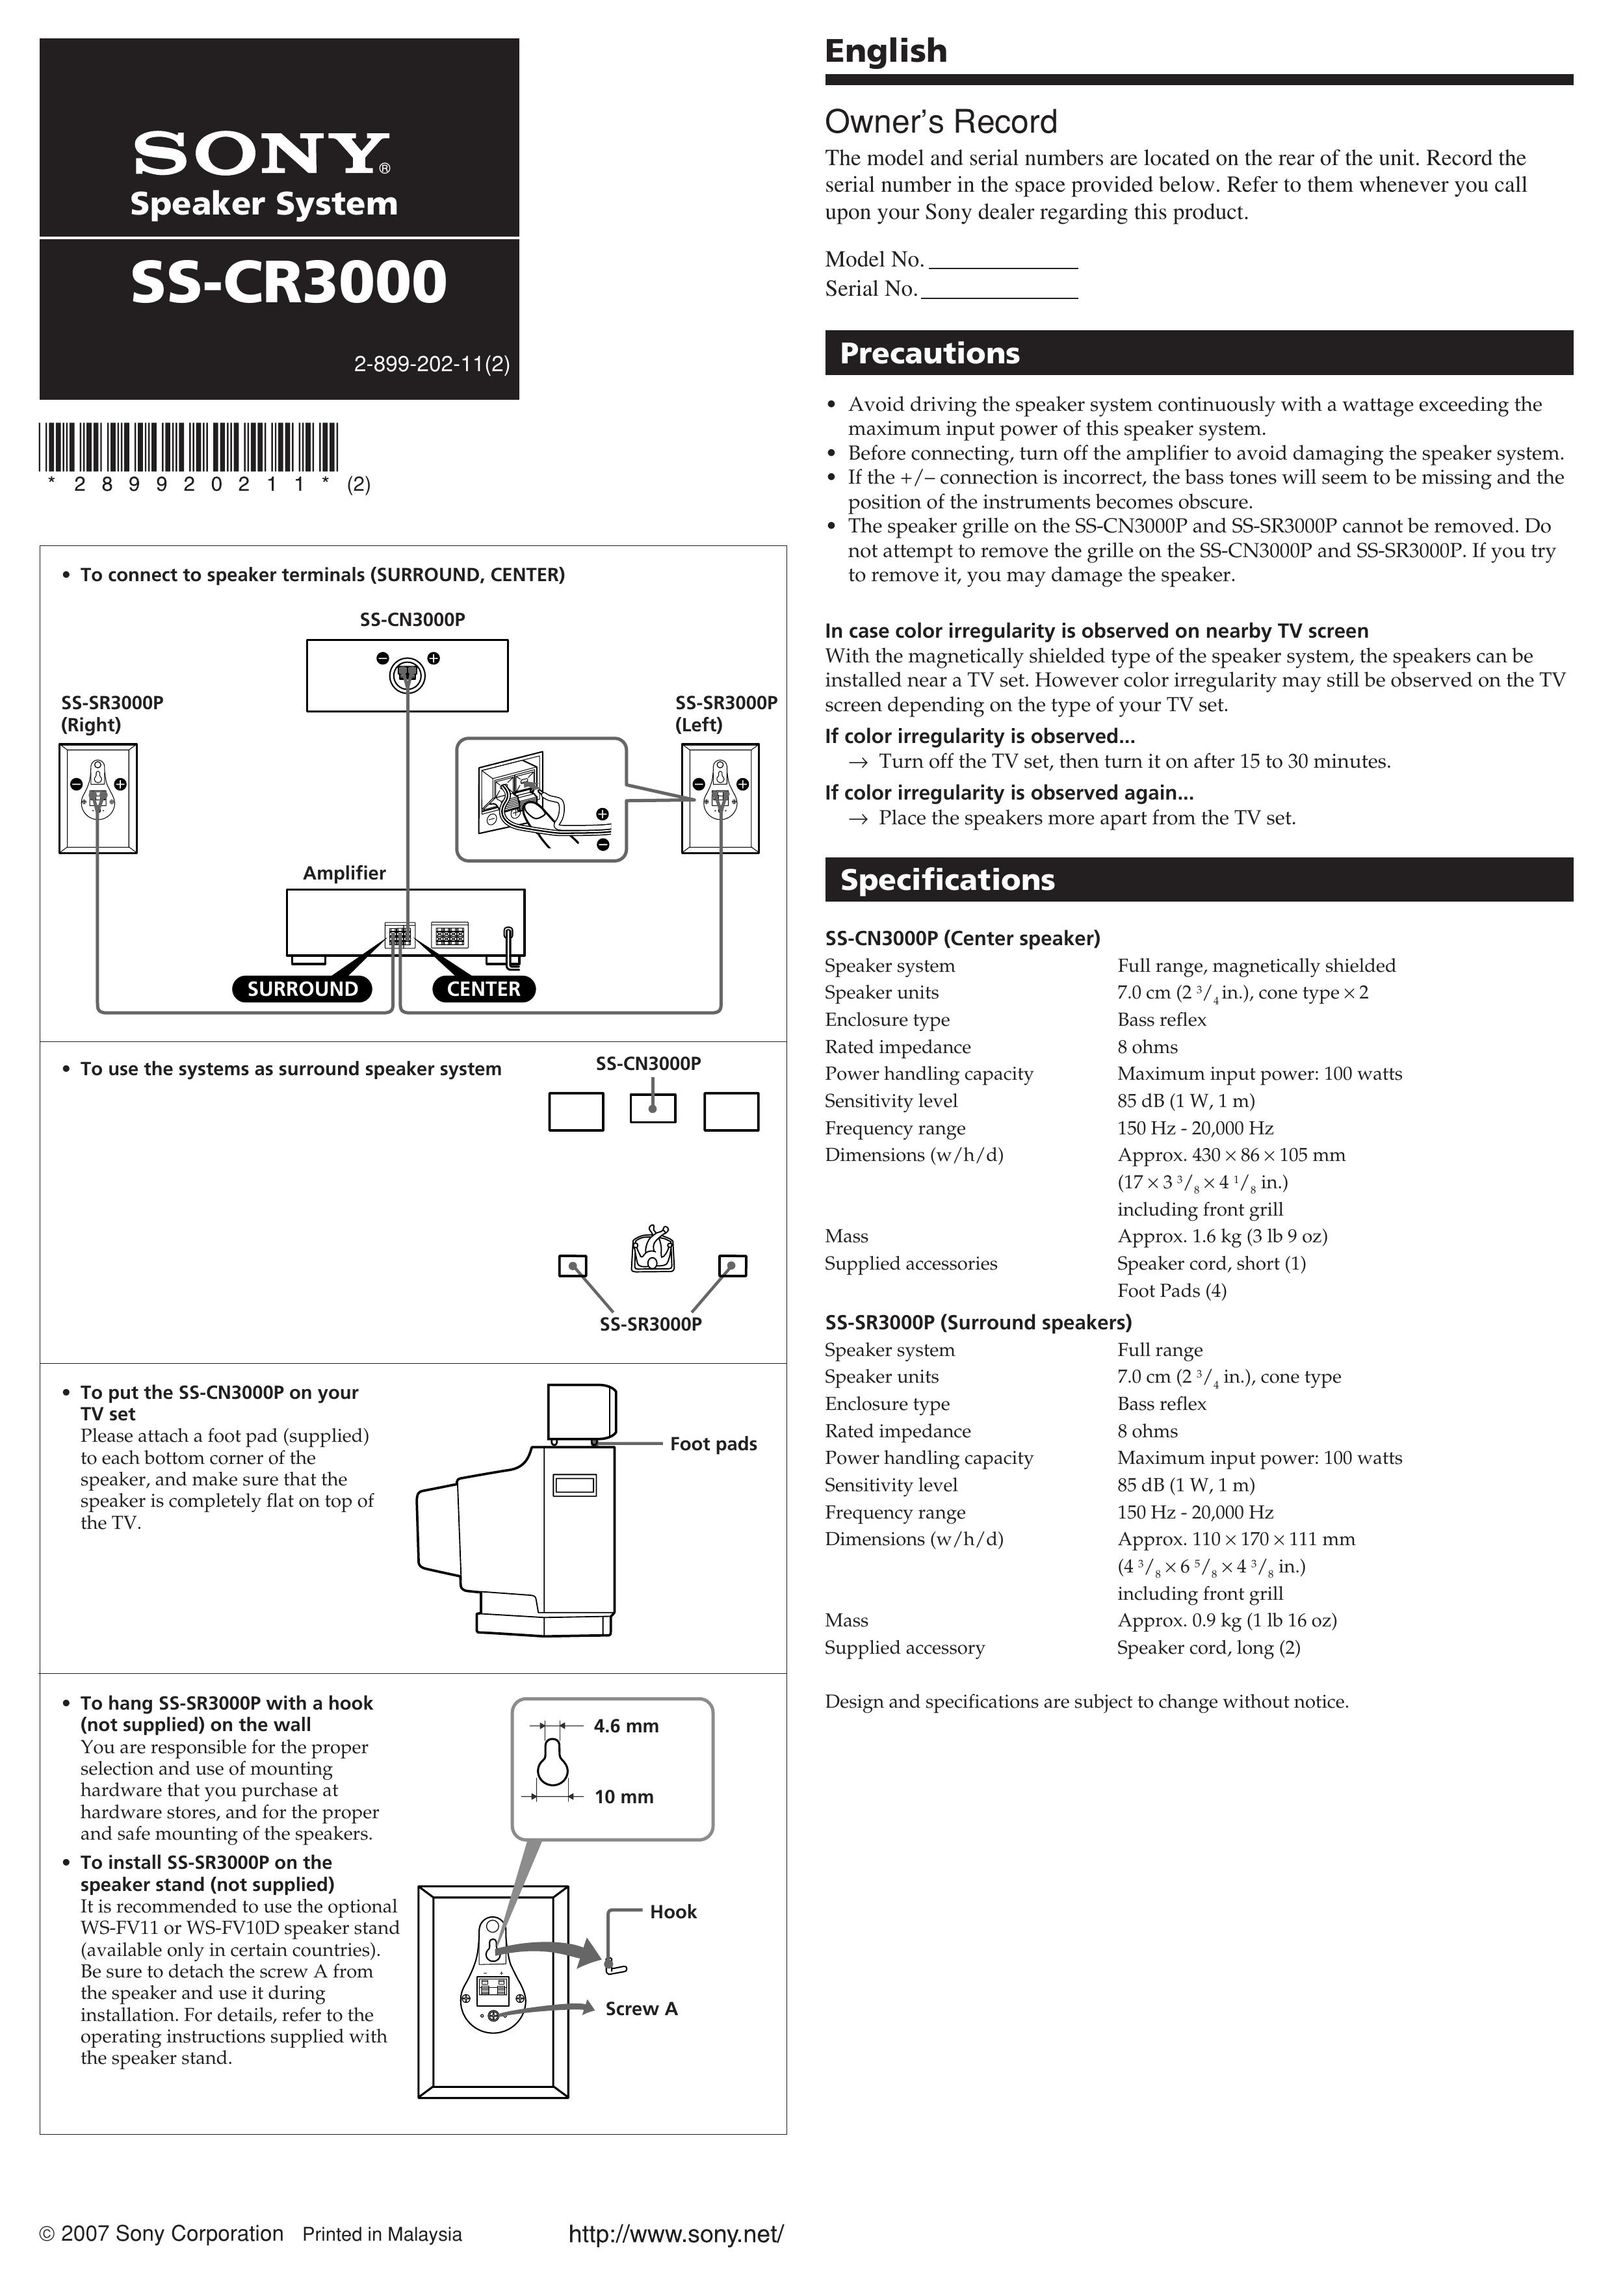 Sony SS-CR3000 Car Speaker User Manual